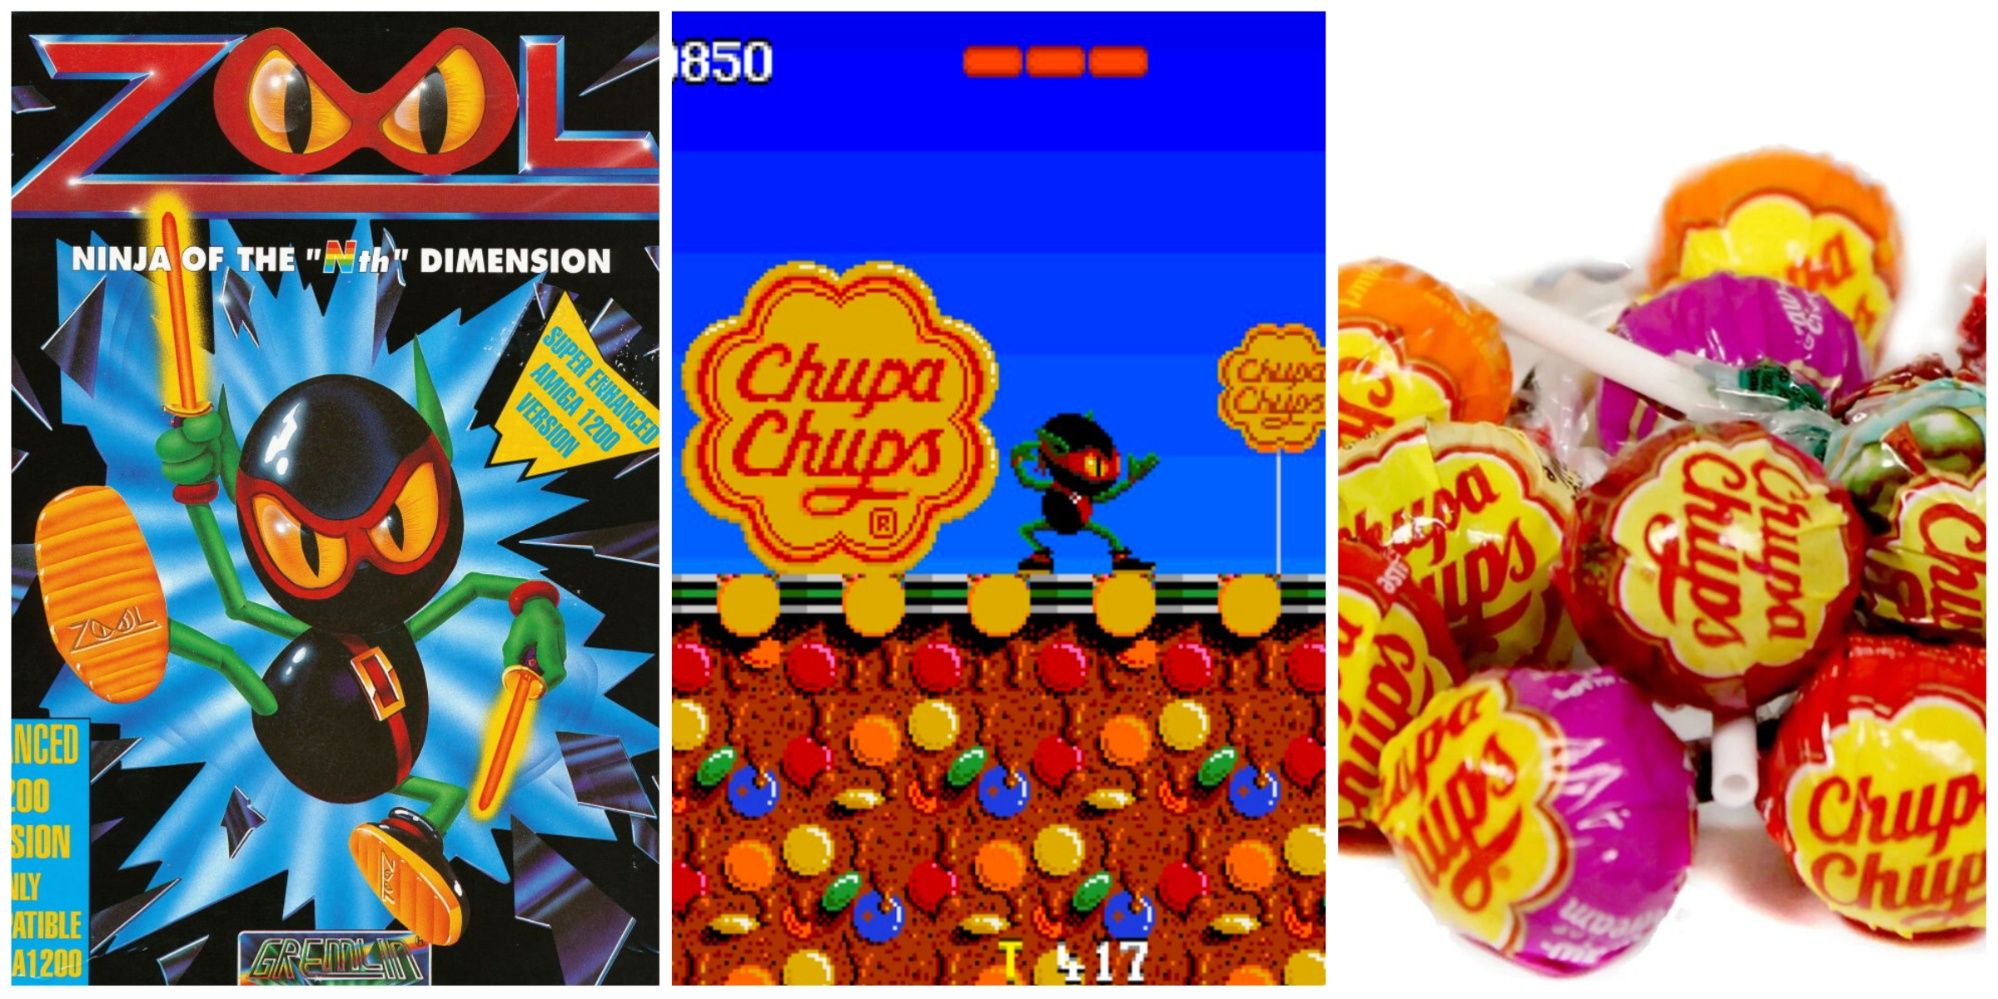 Zool Box Art., Zool Gameplay, Chupa Chups Lollipops